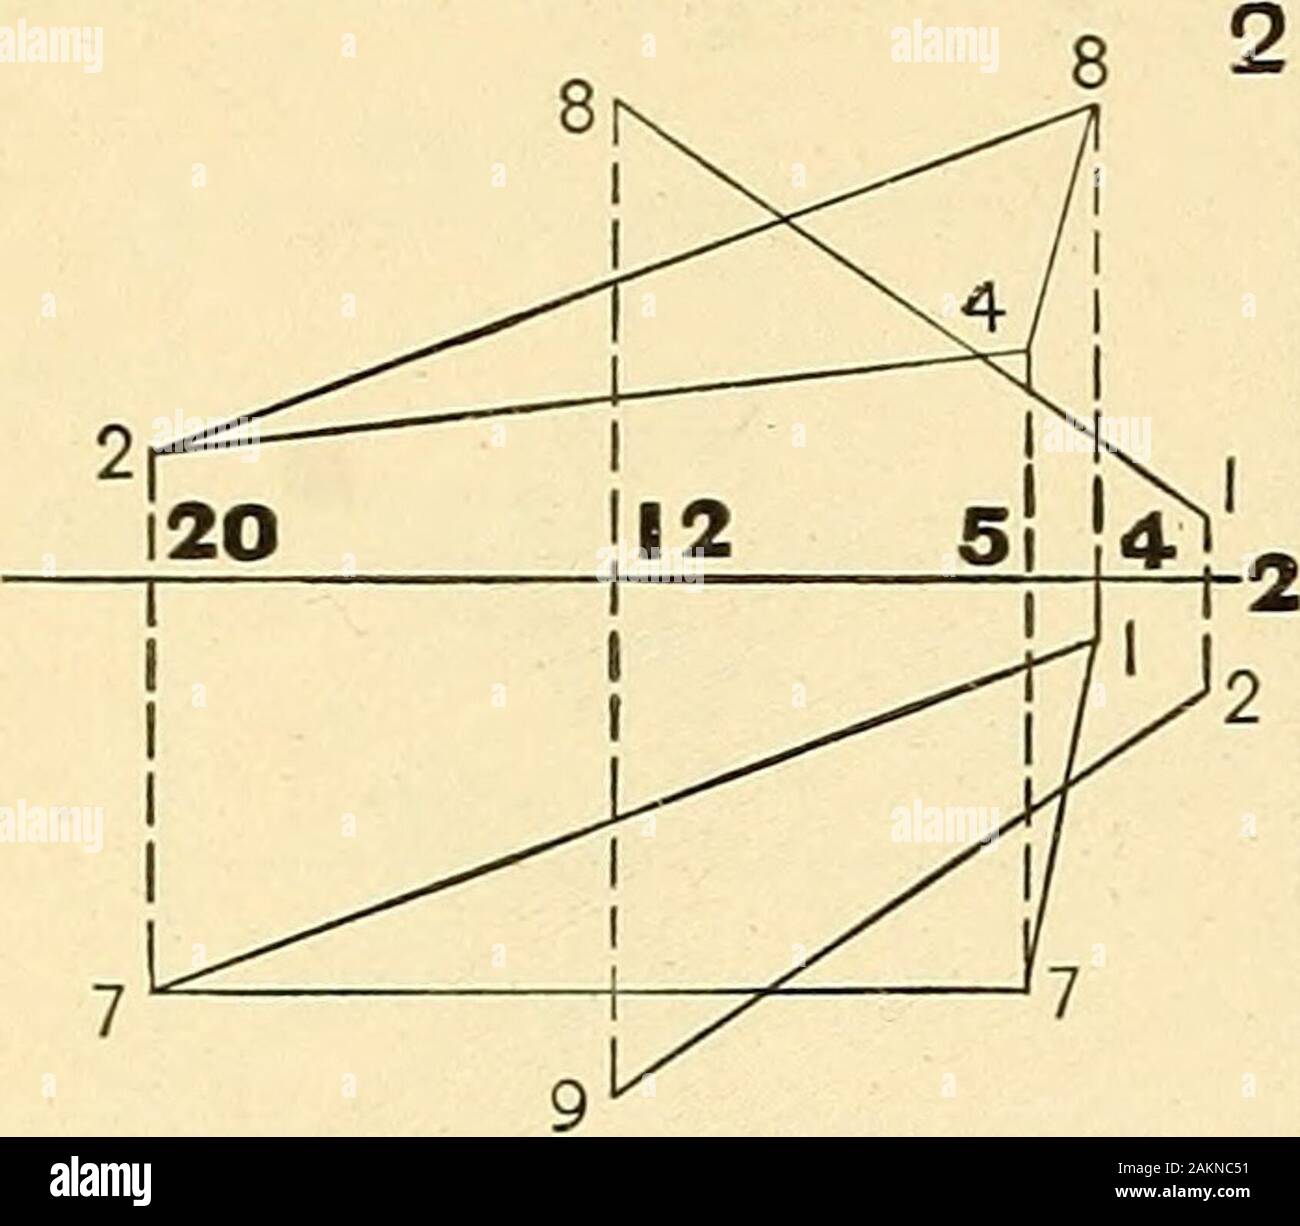 Descriptive geometry . io|  191 IS 112 6 2 ^J .^-^ Stock Photo